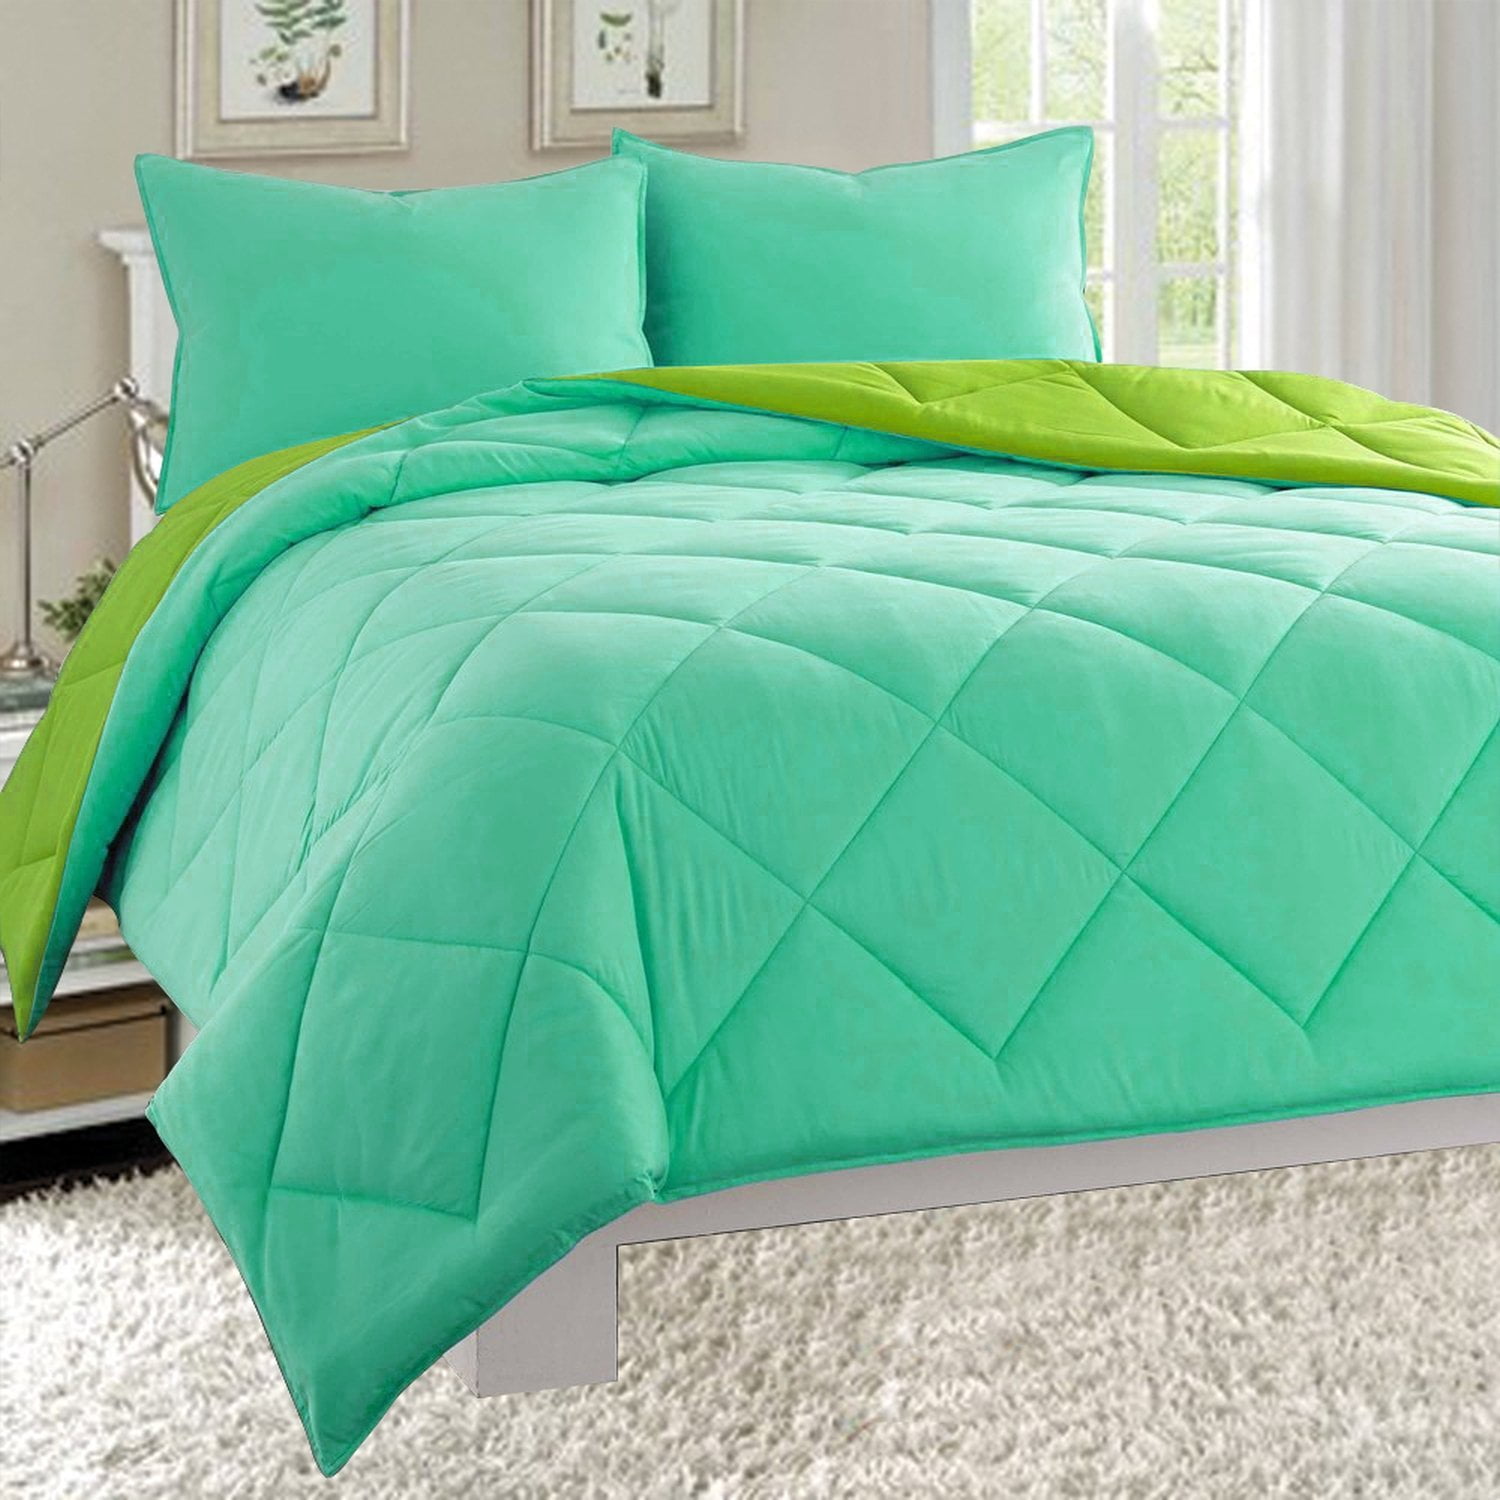 Reversible Comforter Set Down Alternative 3-Piece Bedding Super SOFT 11 Colors